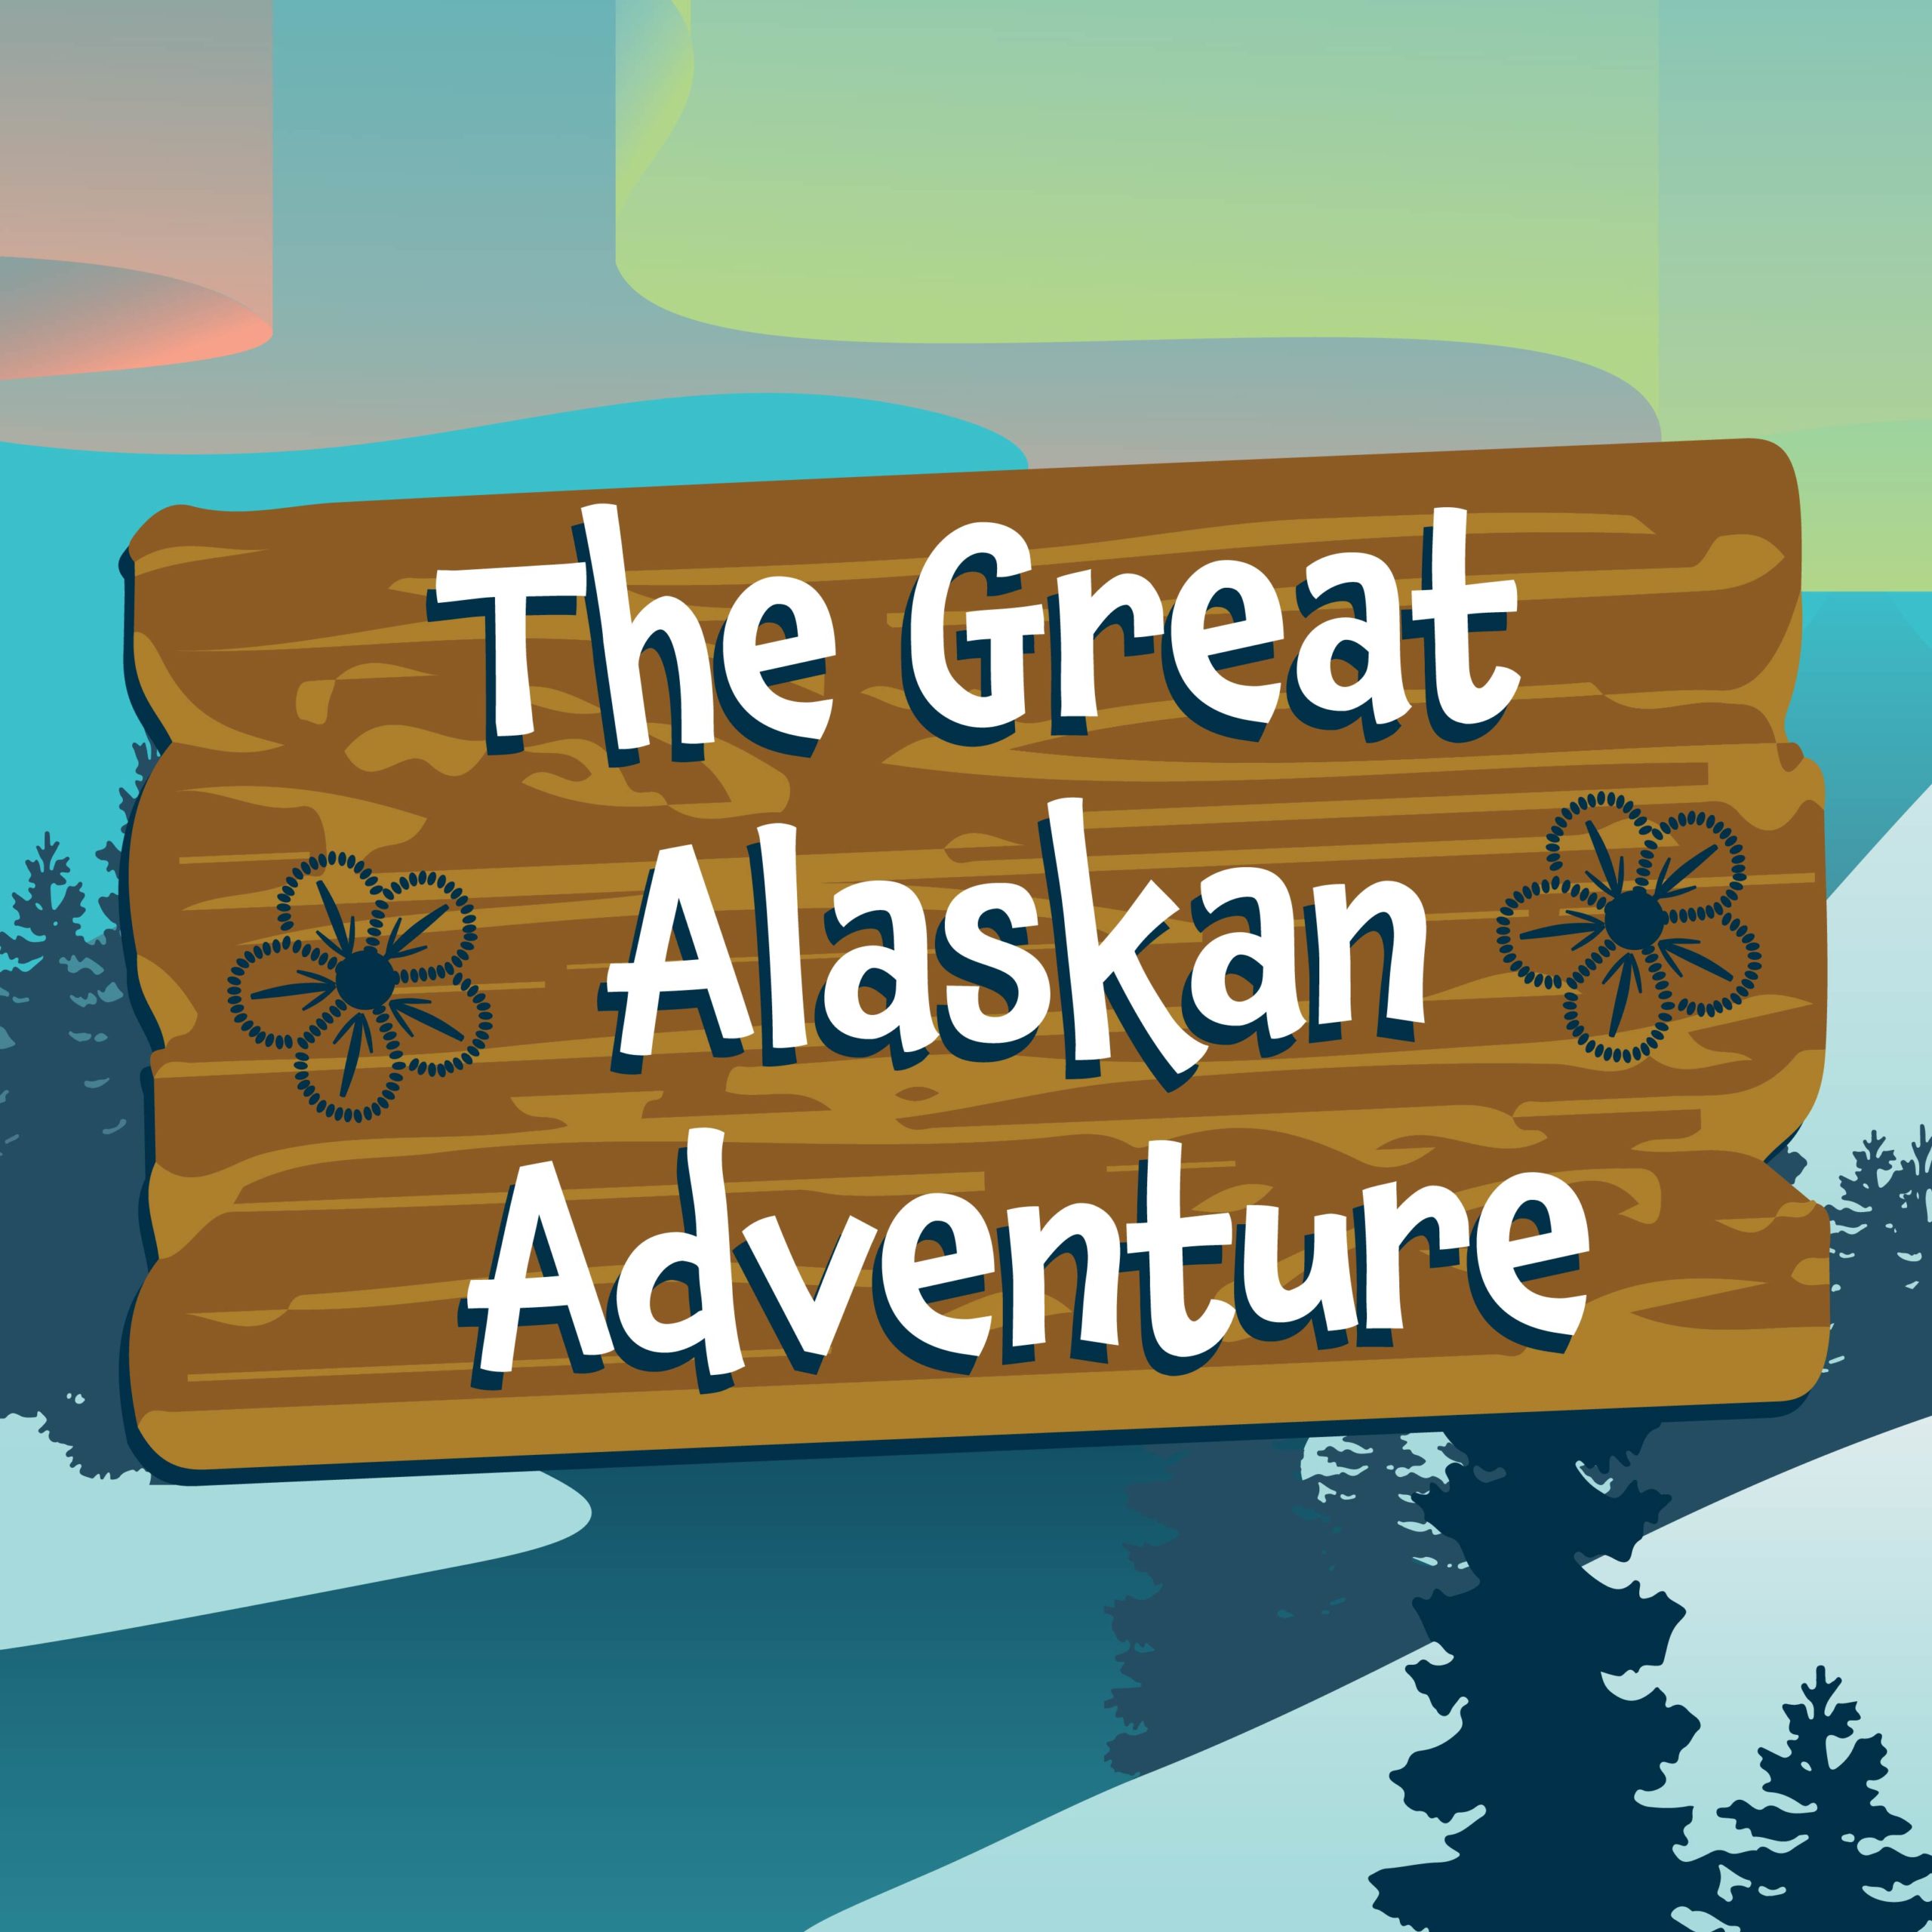 The Great Alaskan Adventure